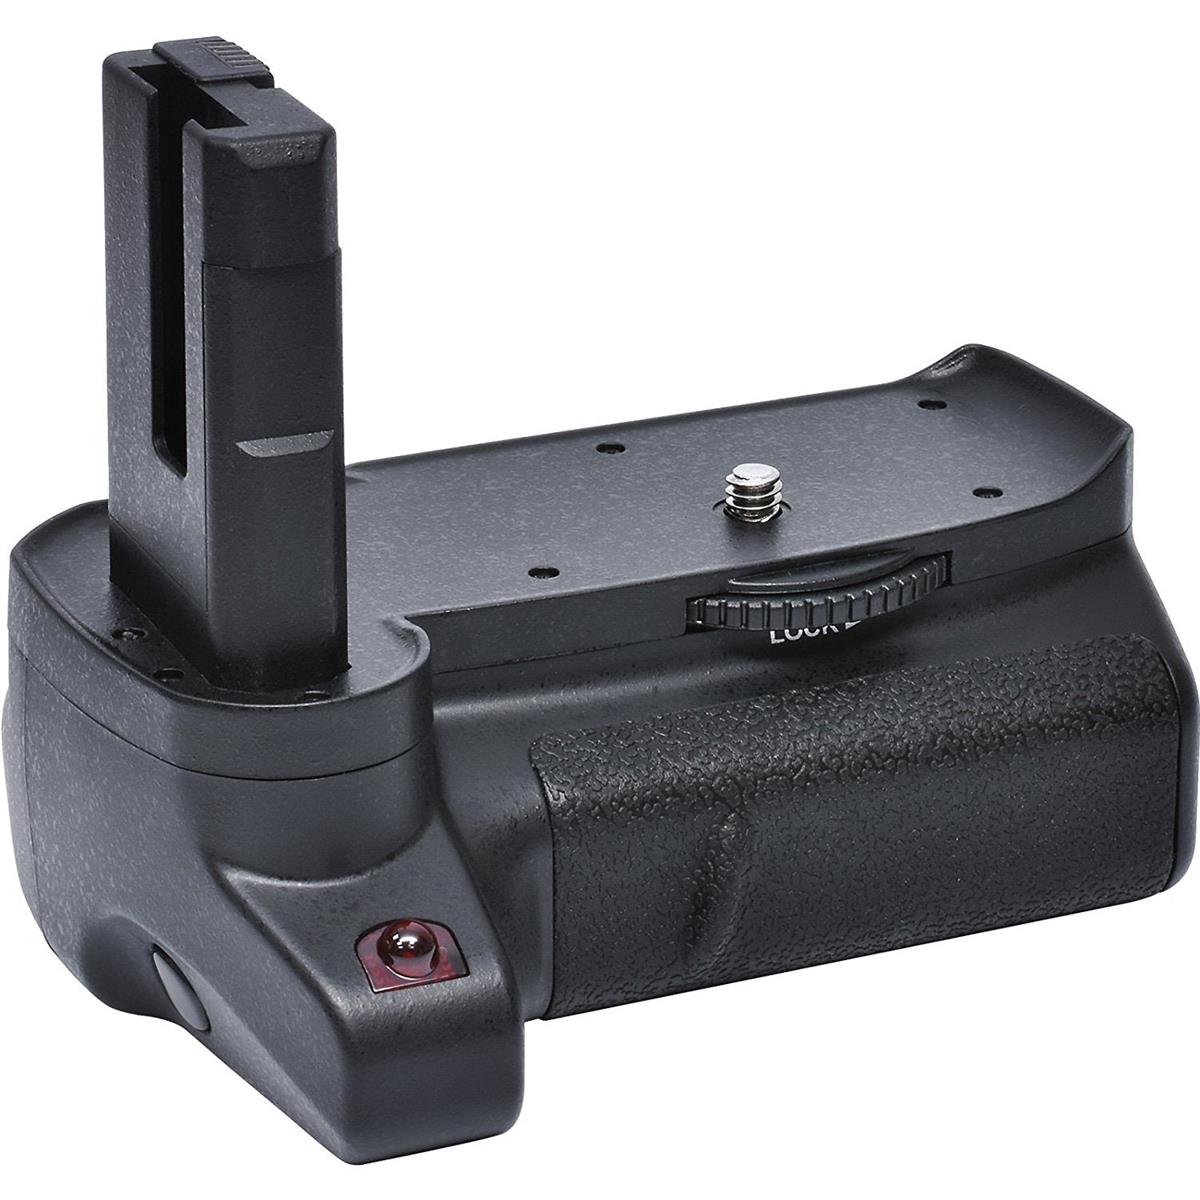 Image of Vivitar Battery Grip for Nikon D3400 DSLR Camera